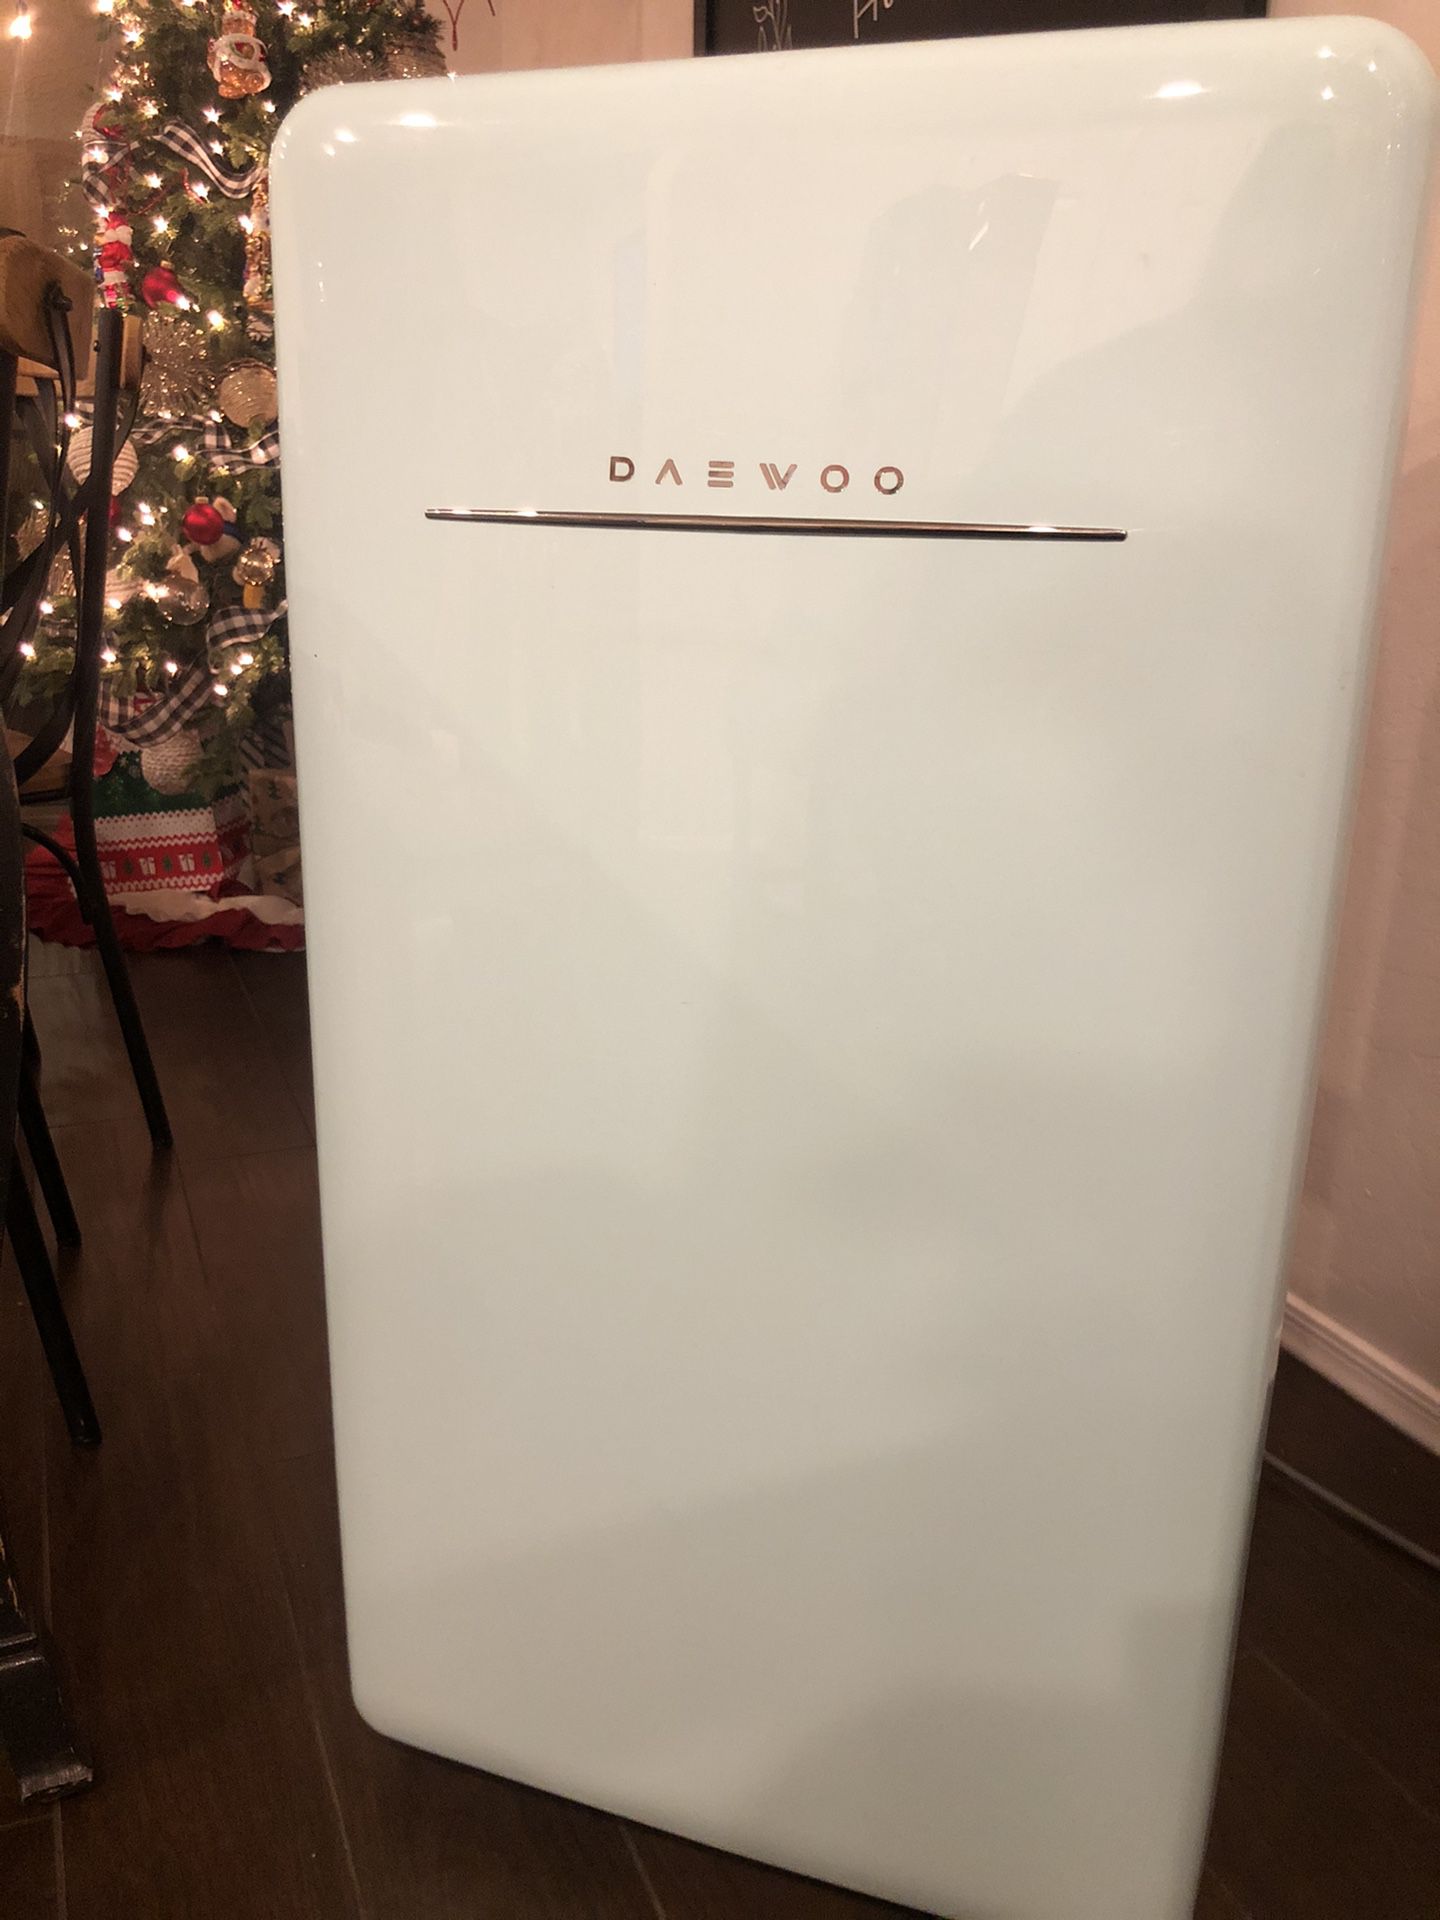 RETRO compact fridge refrigerator 4.4 cu. ft. LIKE NEW